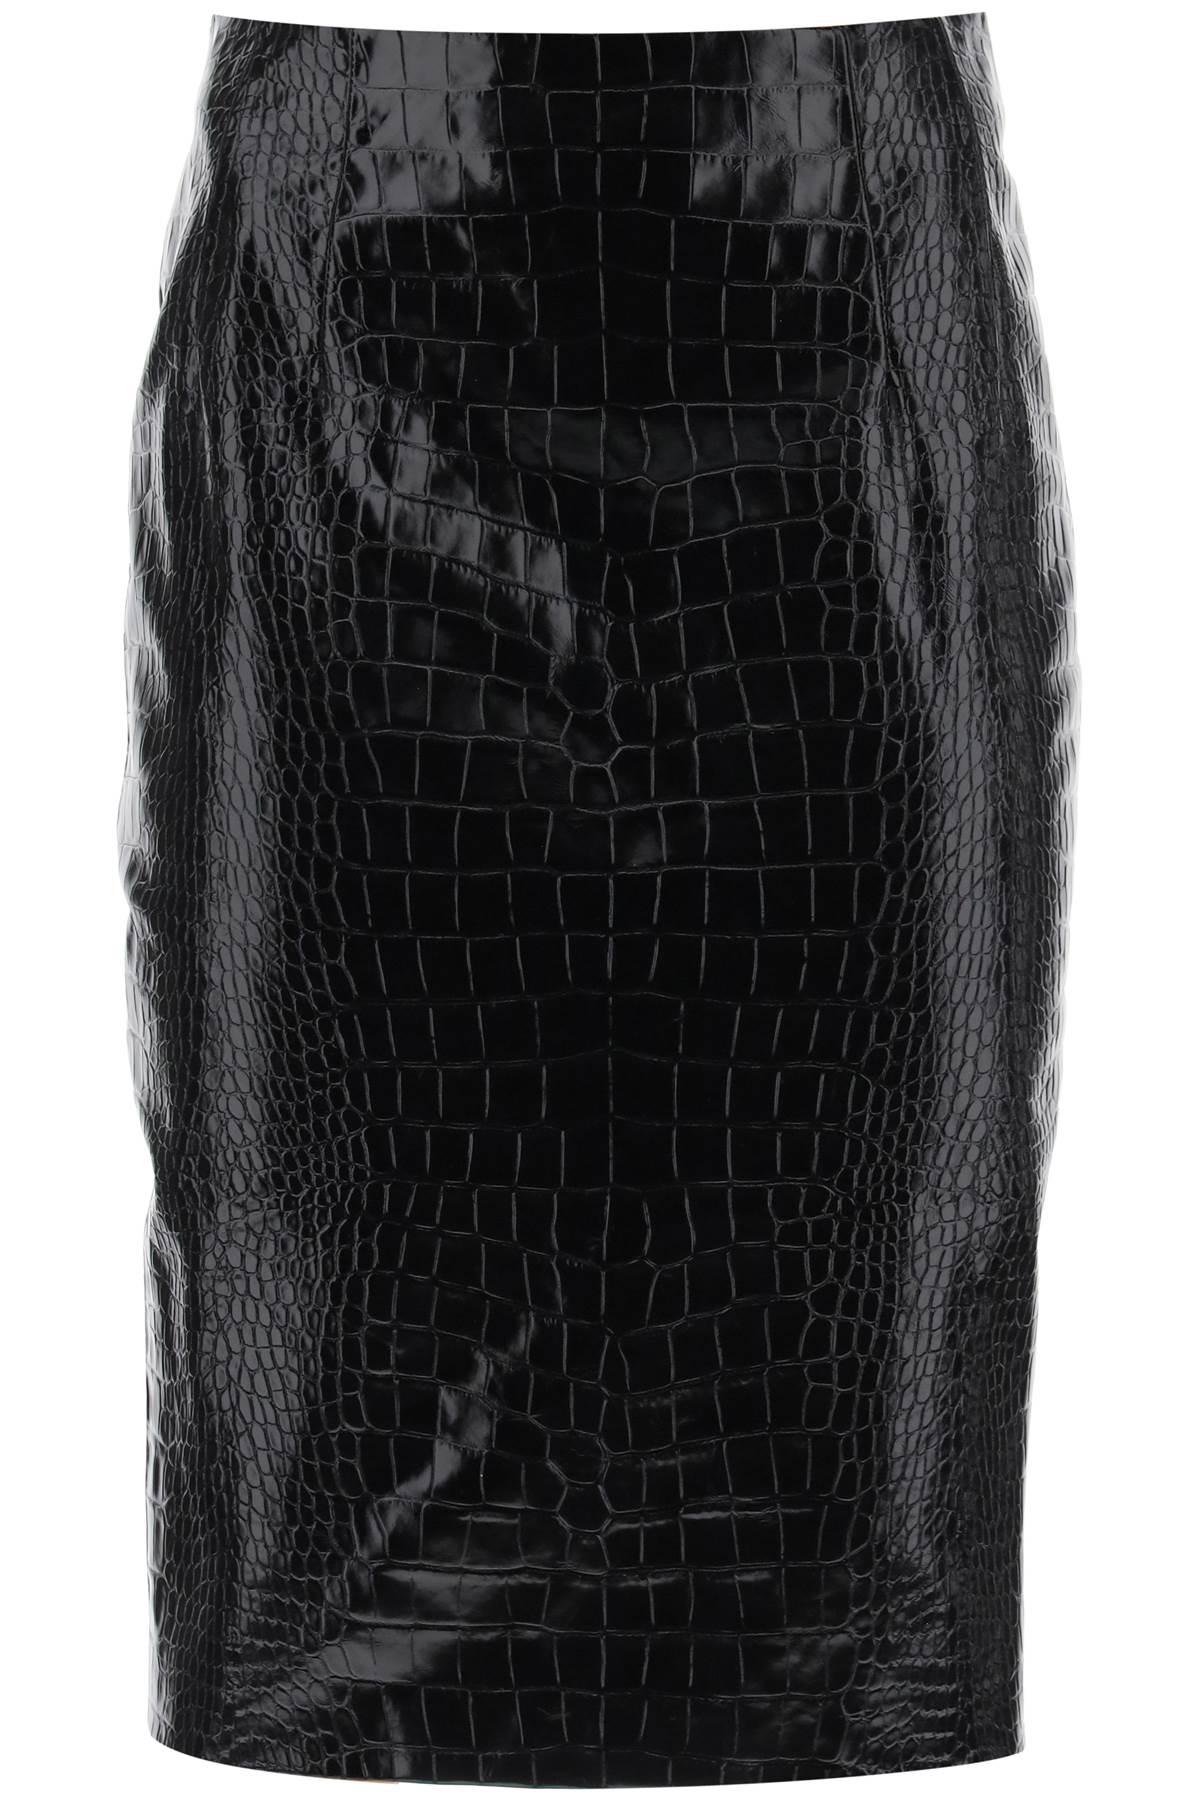 Versace Black Croc-Effect Leather Mini Skirt - JOHN JULIA